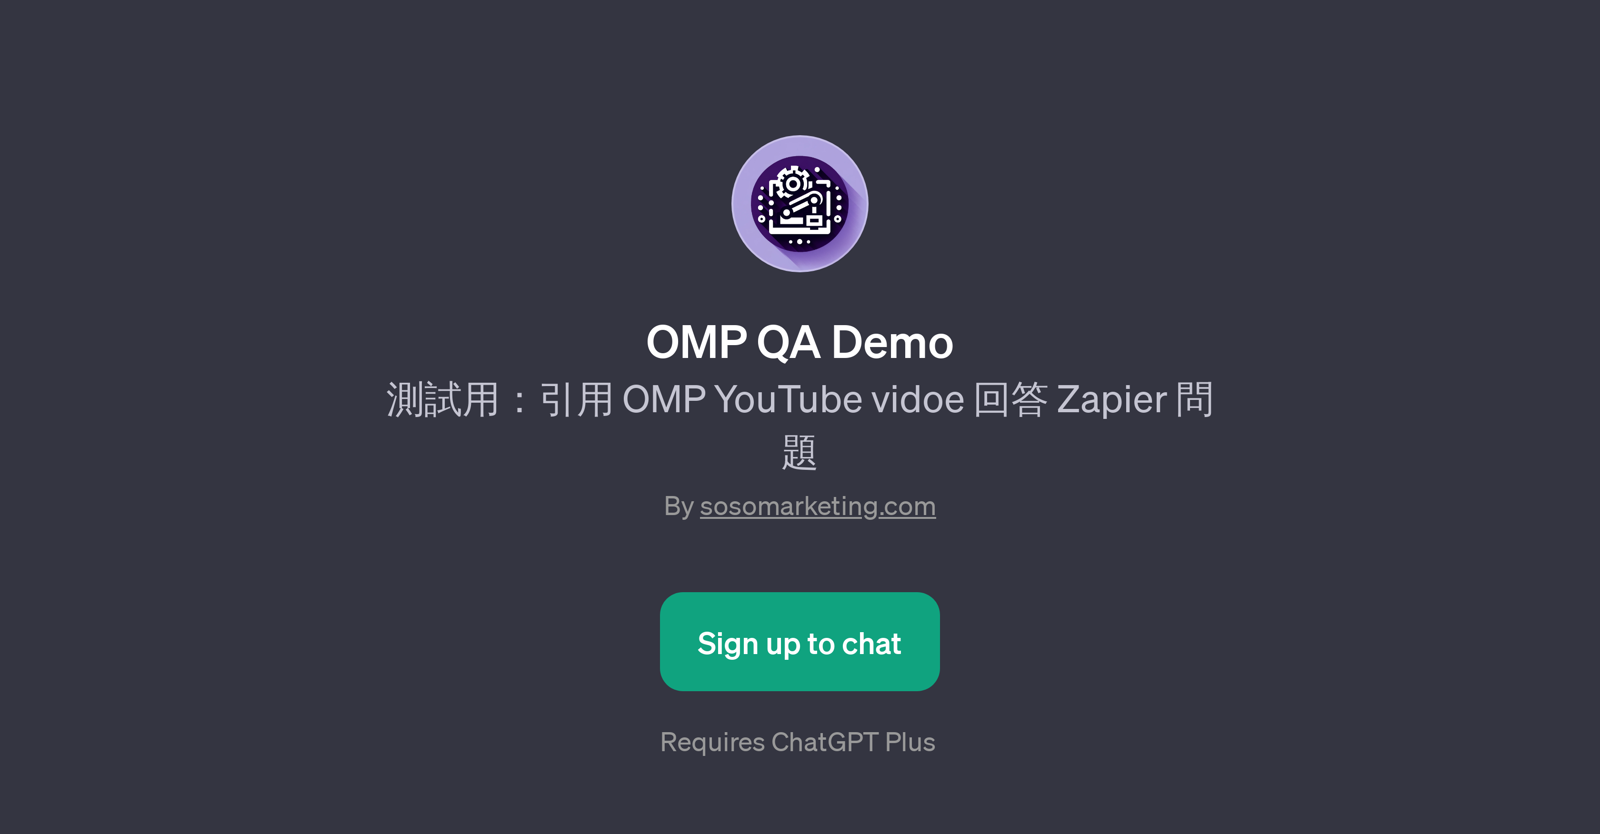 OMP QA Demo website